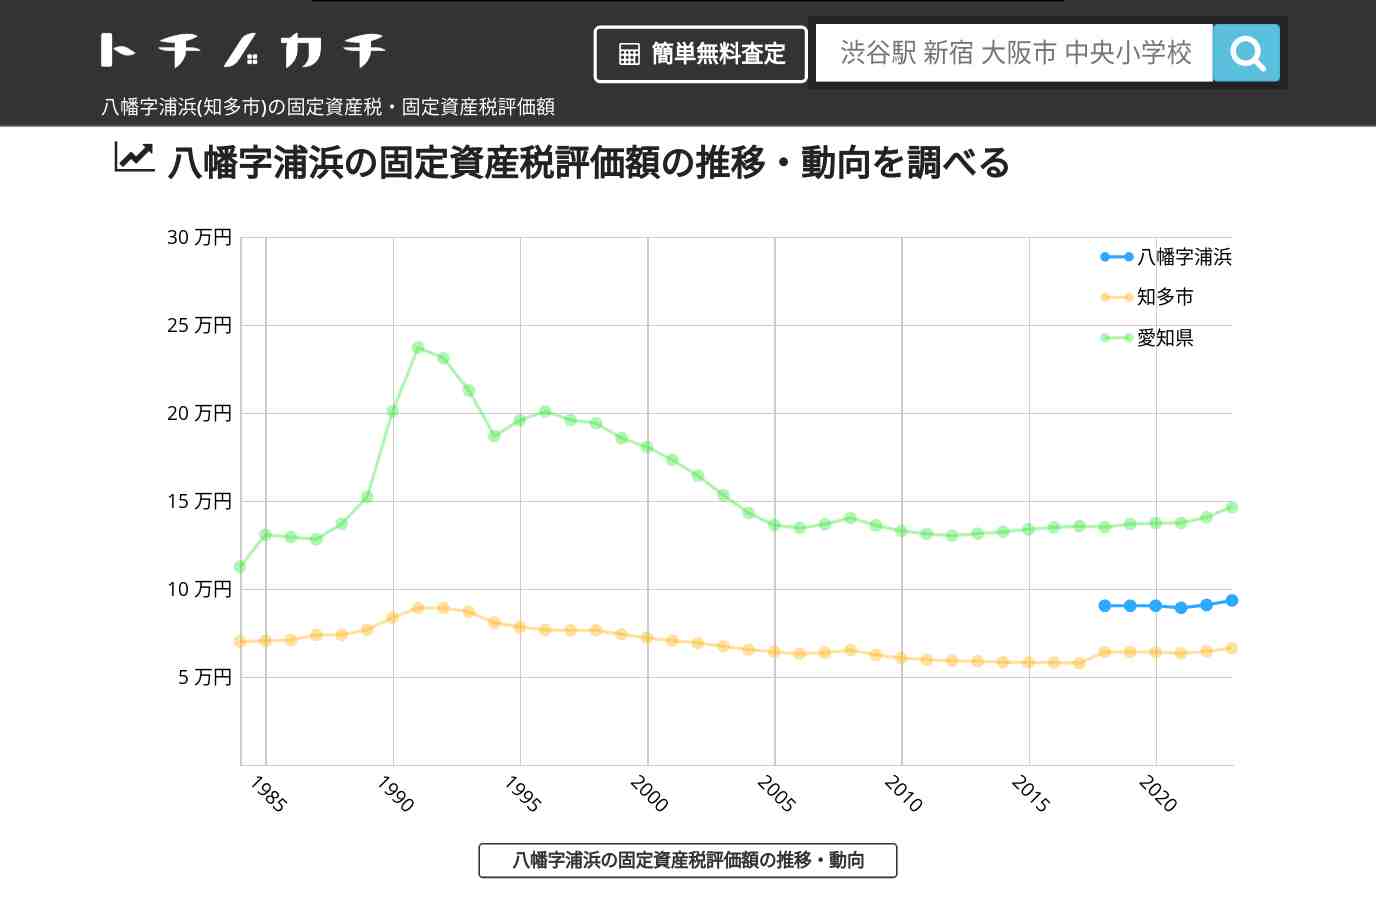 八幡字浦浜(知多市)の固定資産税・固定資産税評価額 | トチノカチ